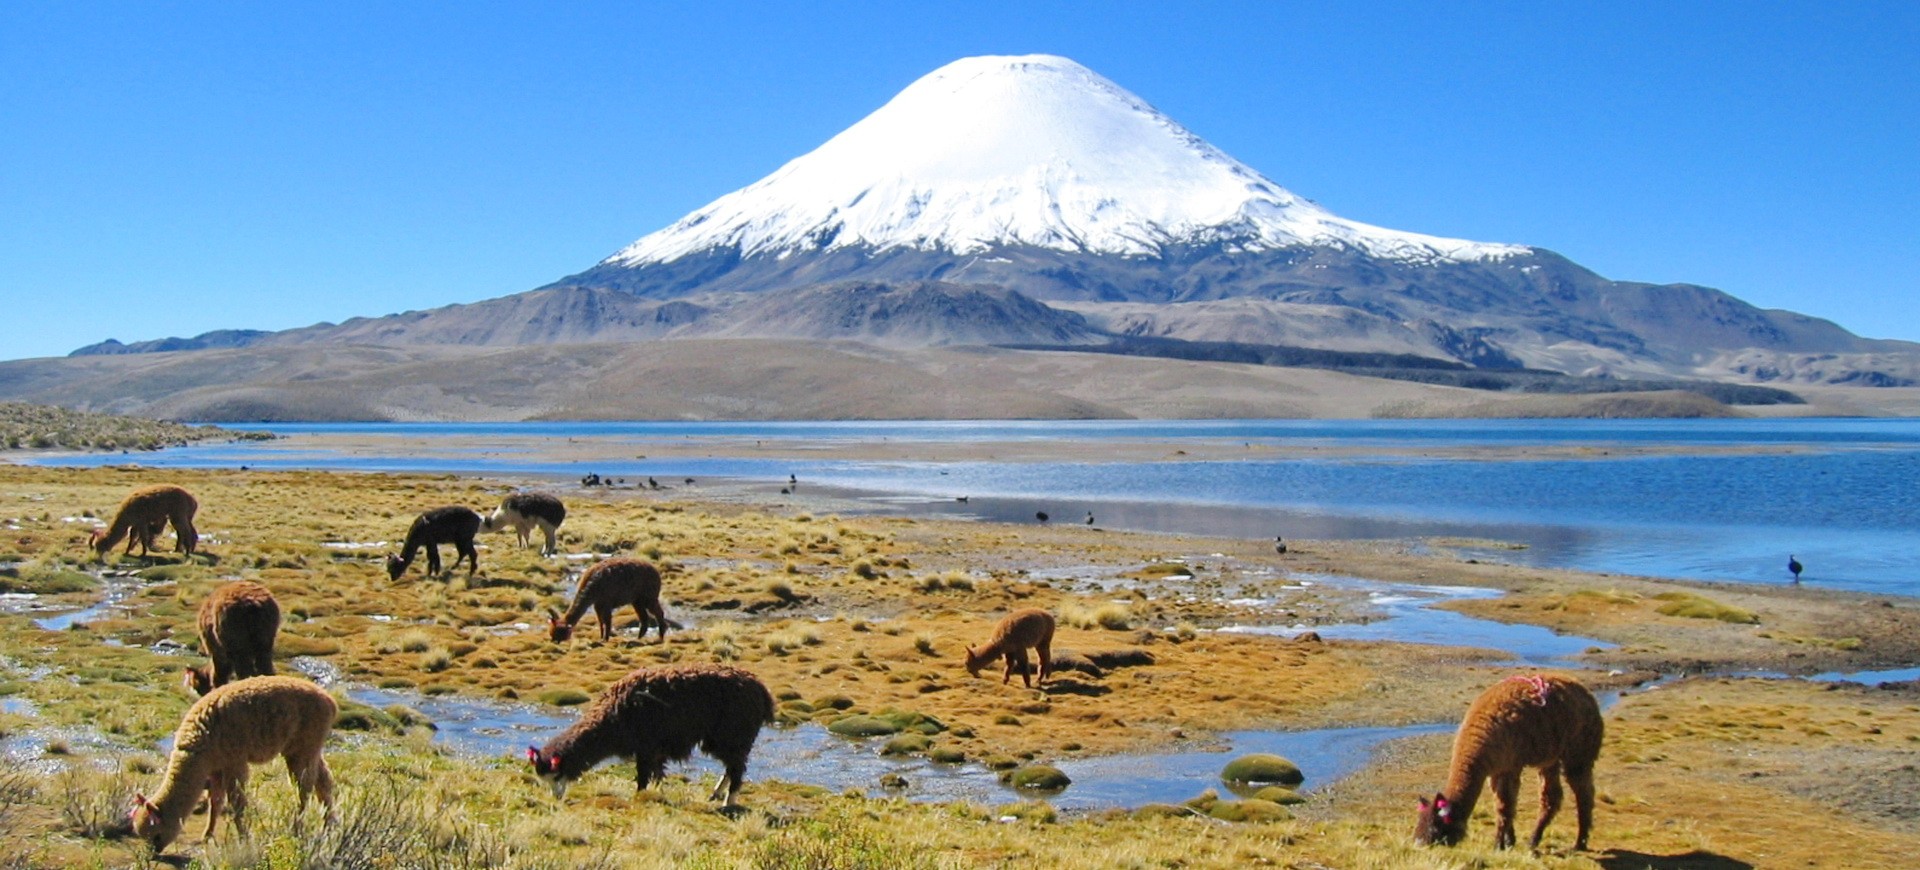 Chili San Pedro de Atacama Volcan Villarrica et Lamas